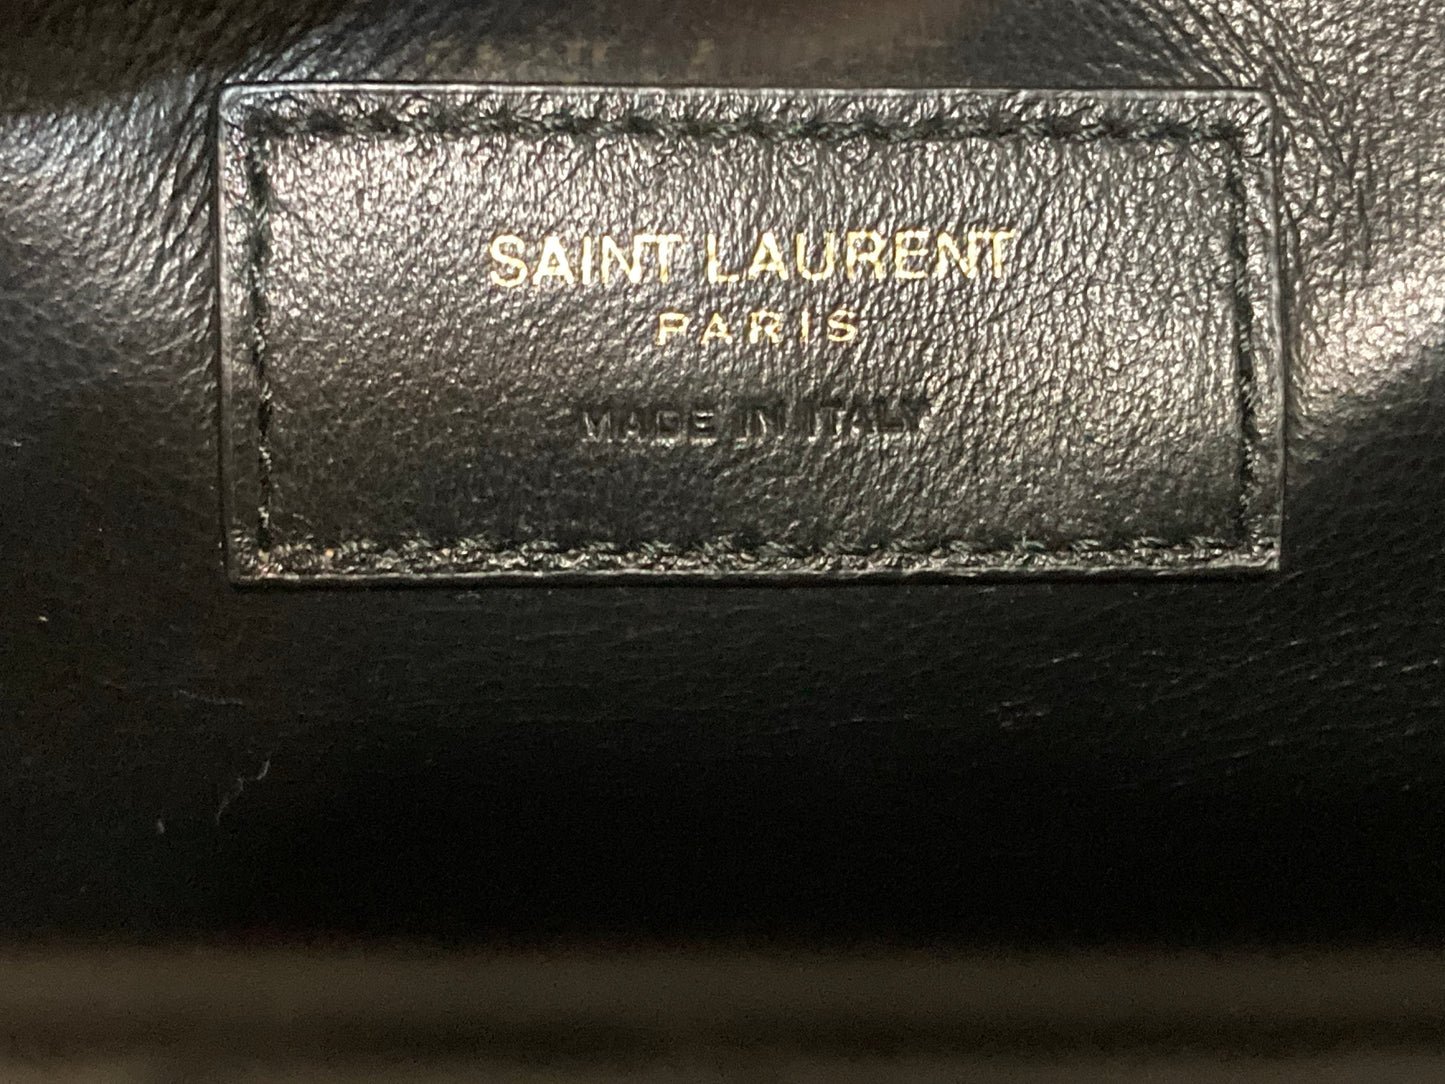 YVES SAINT LAURENT Leather Envelope Flap Bag Black